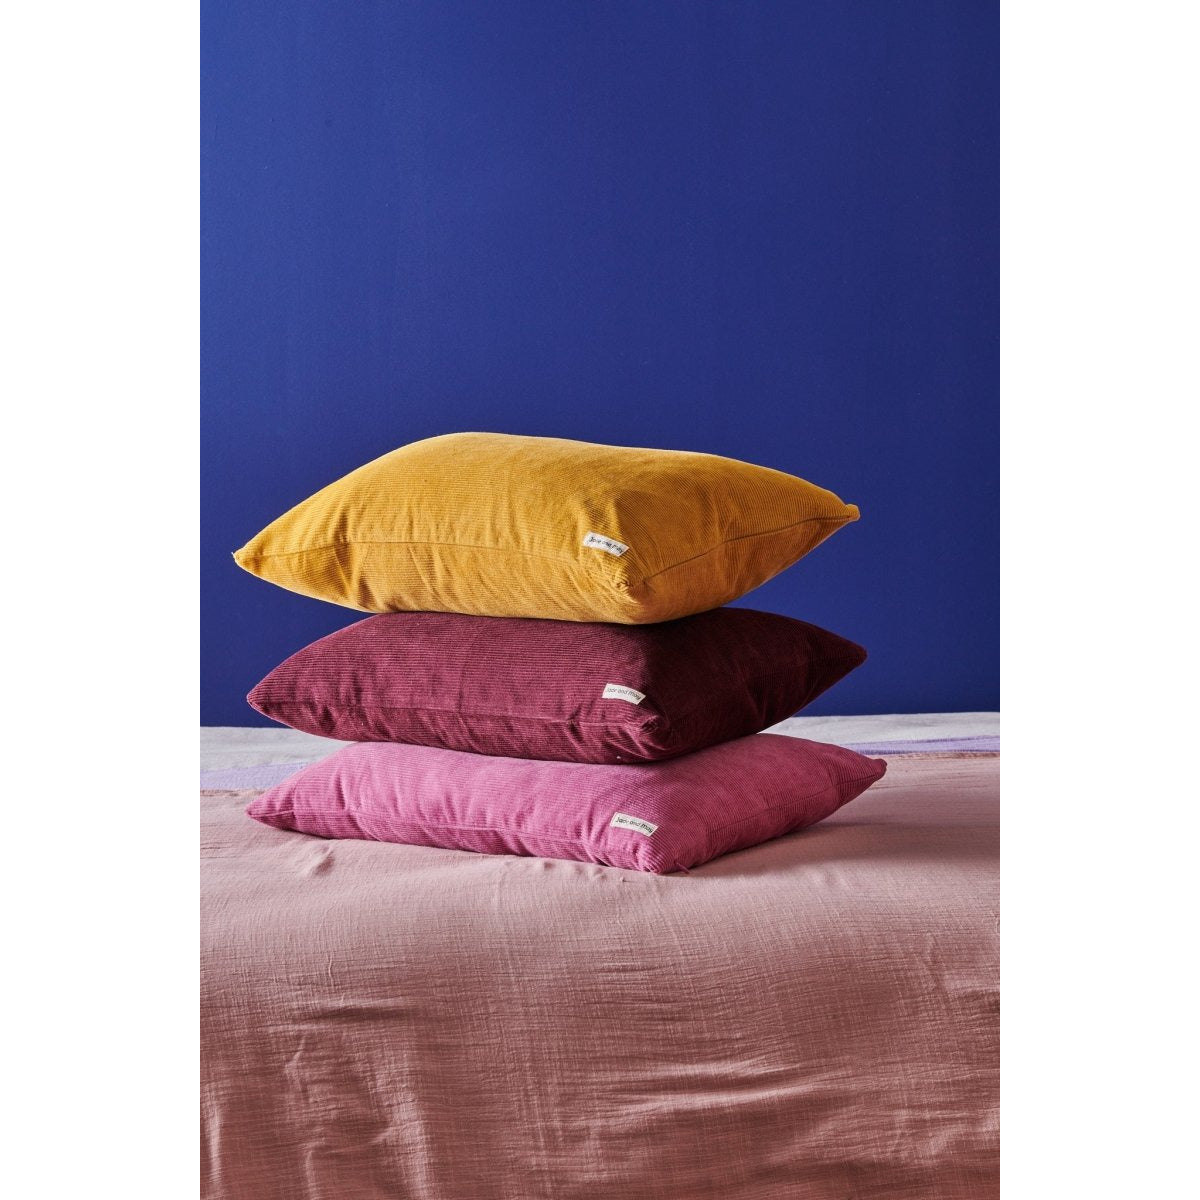 Colourful Cushion in Fuchsia Cord-Jade and May-Cushion Cover-Jade and May